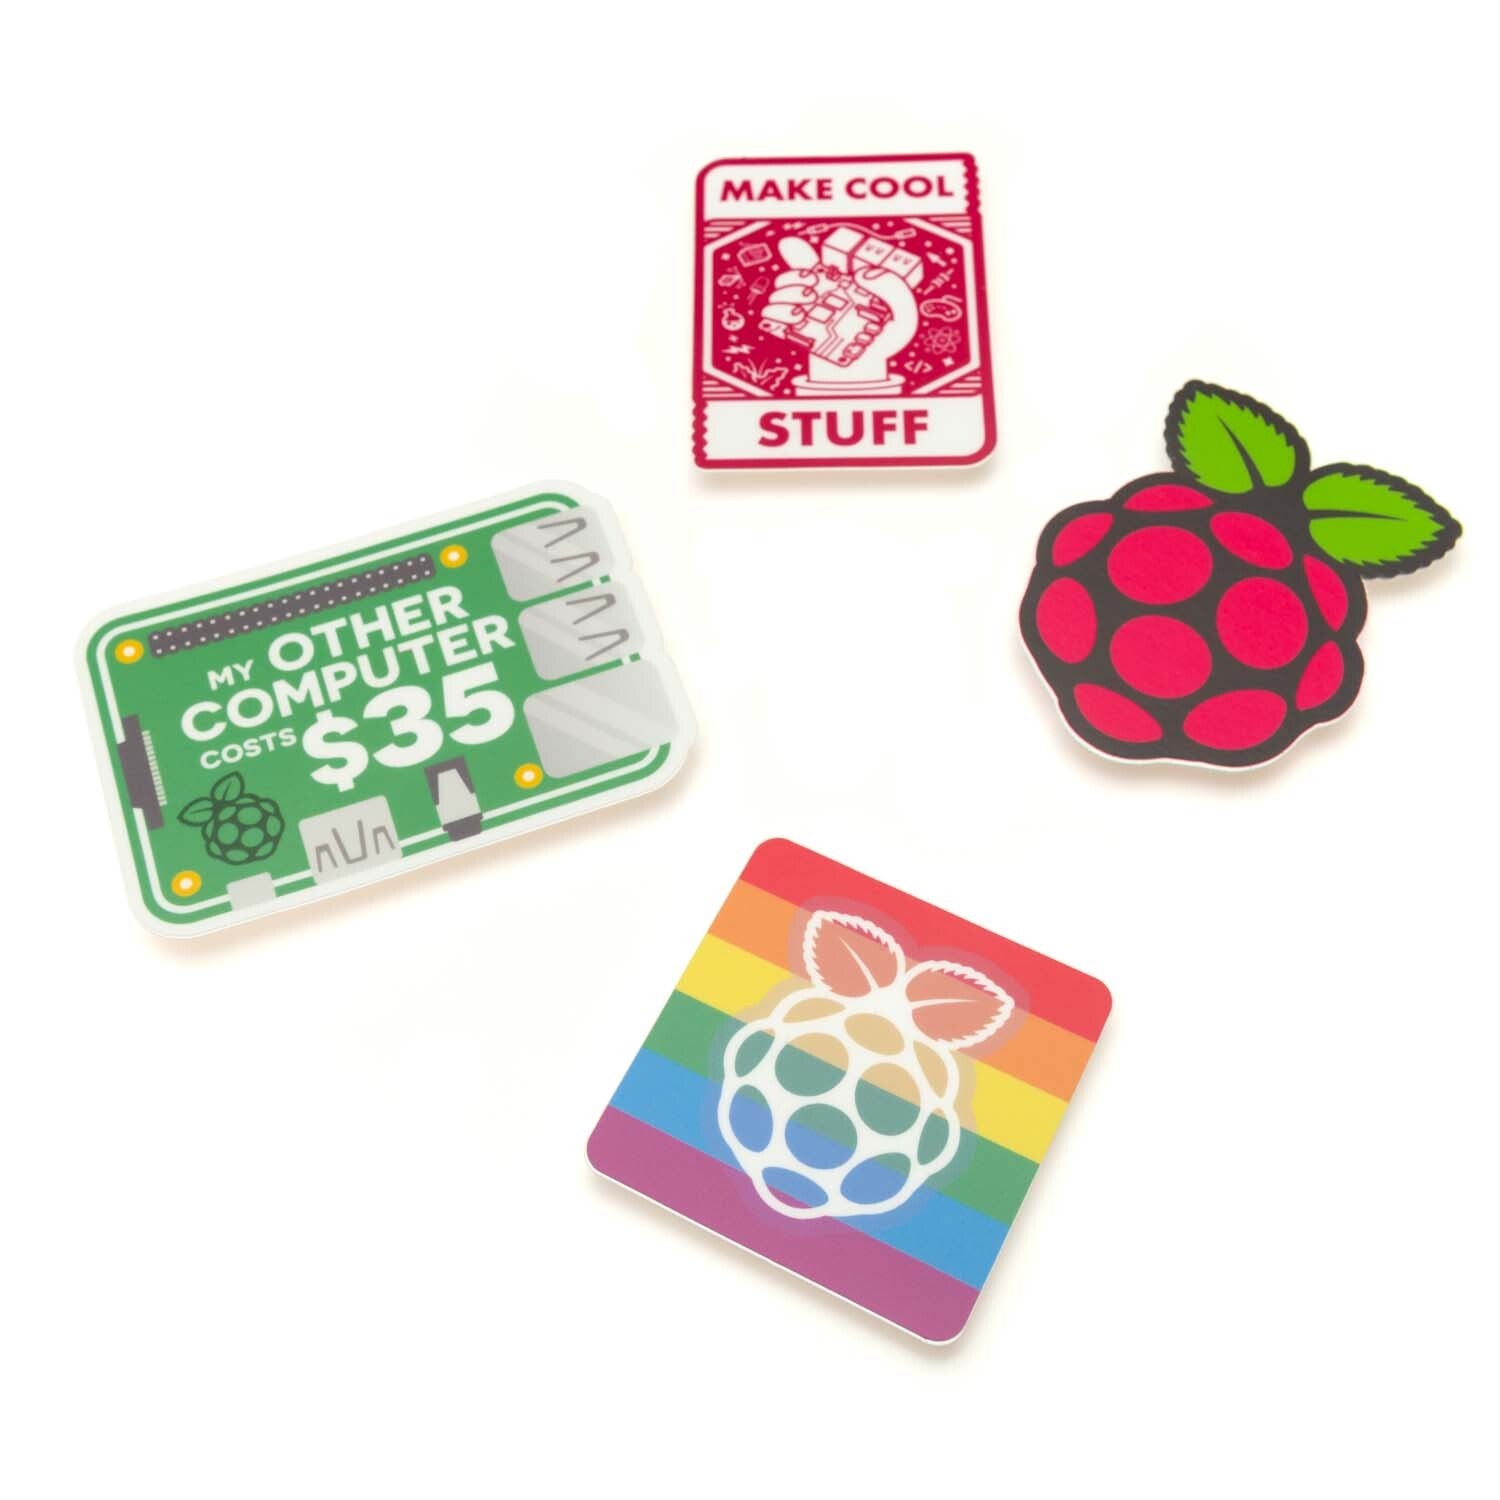 Raspberry Pi Stickers - 4 Pack